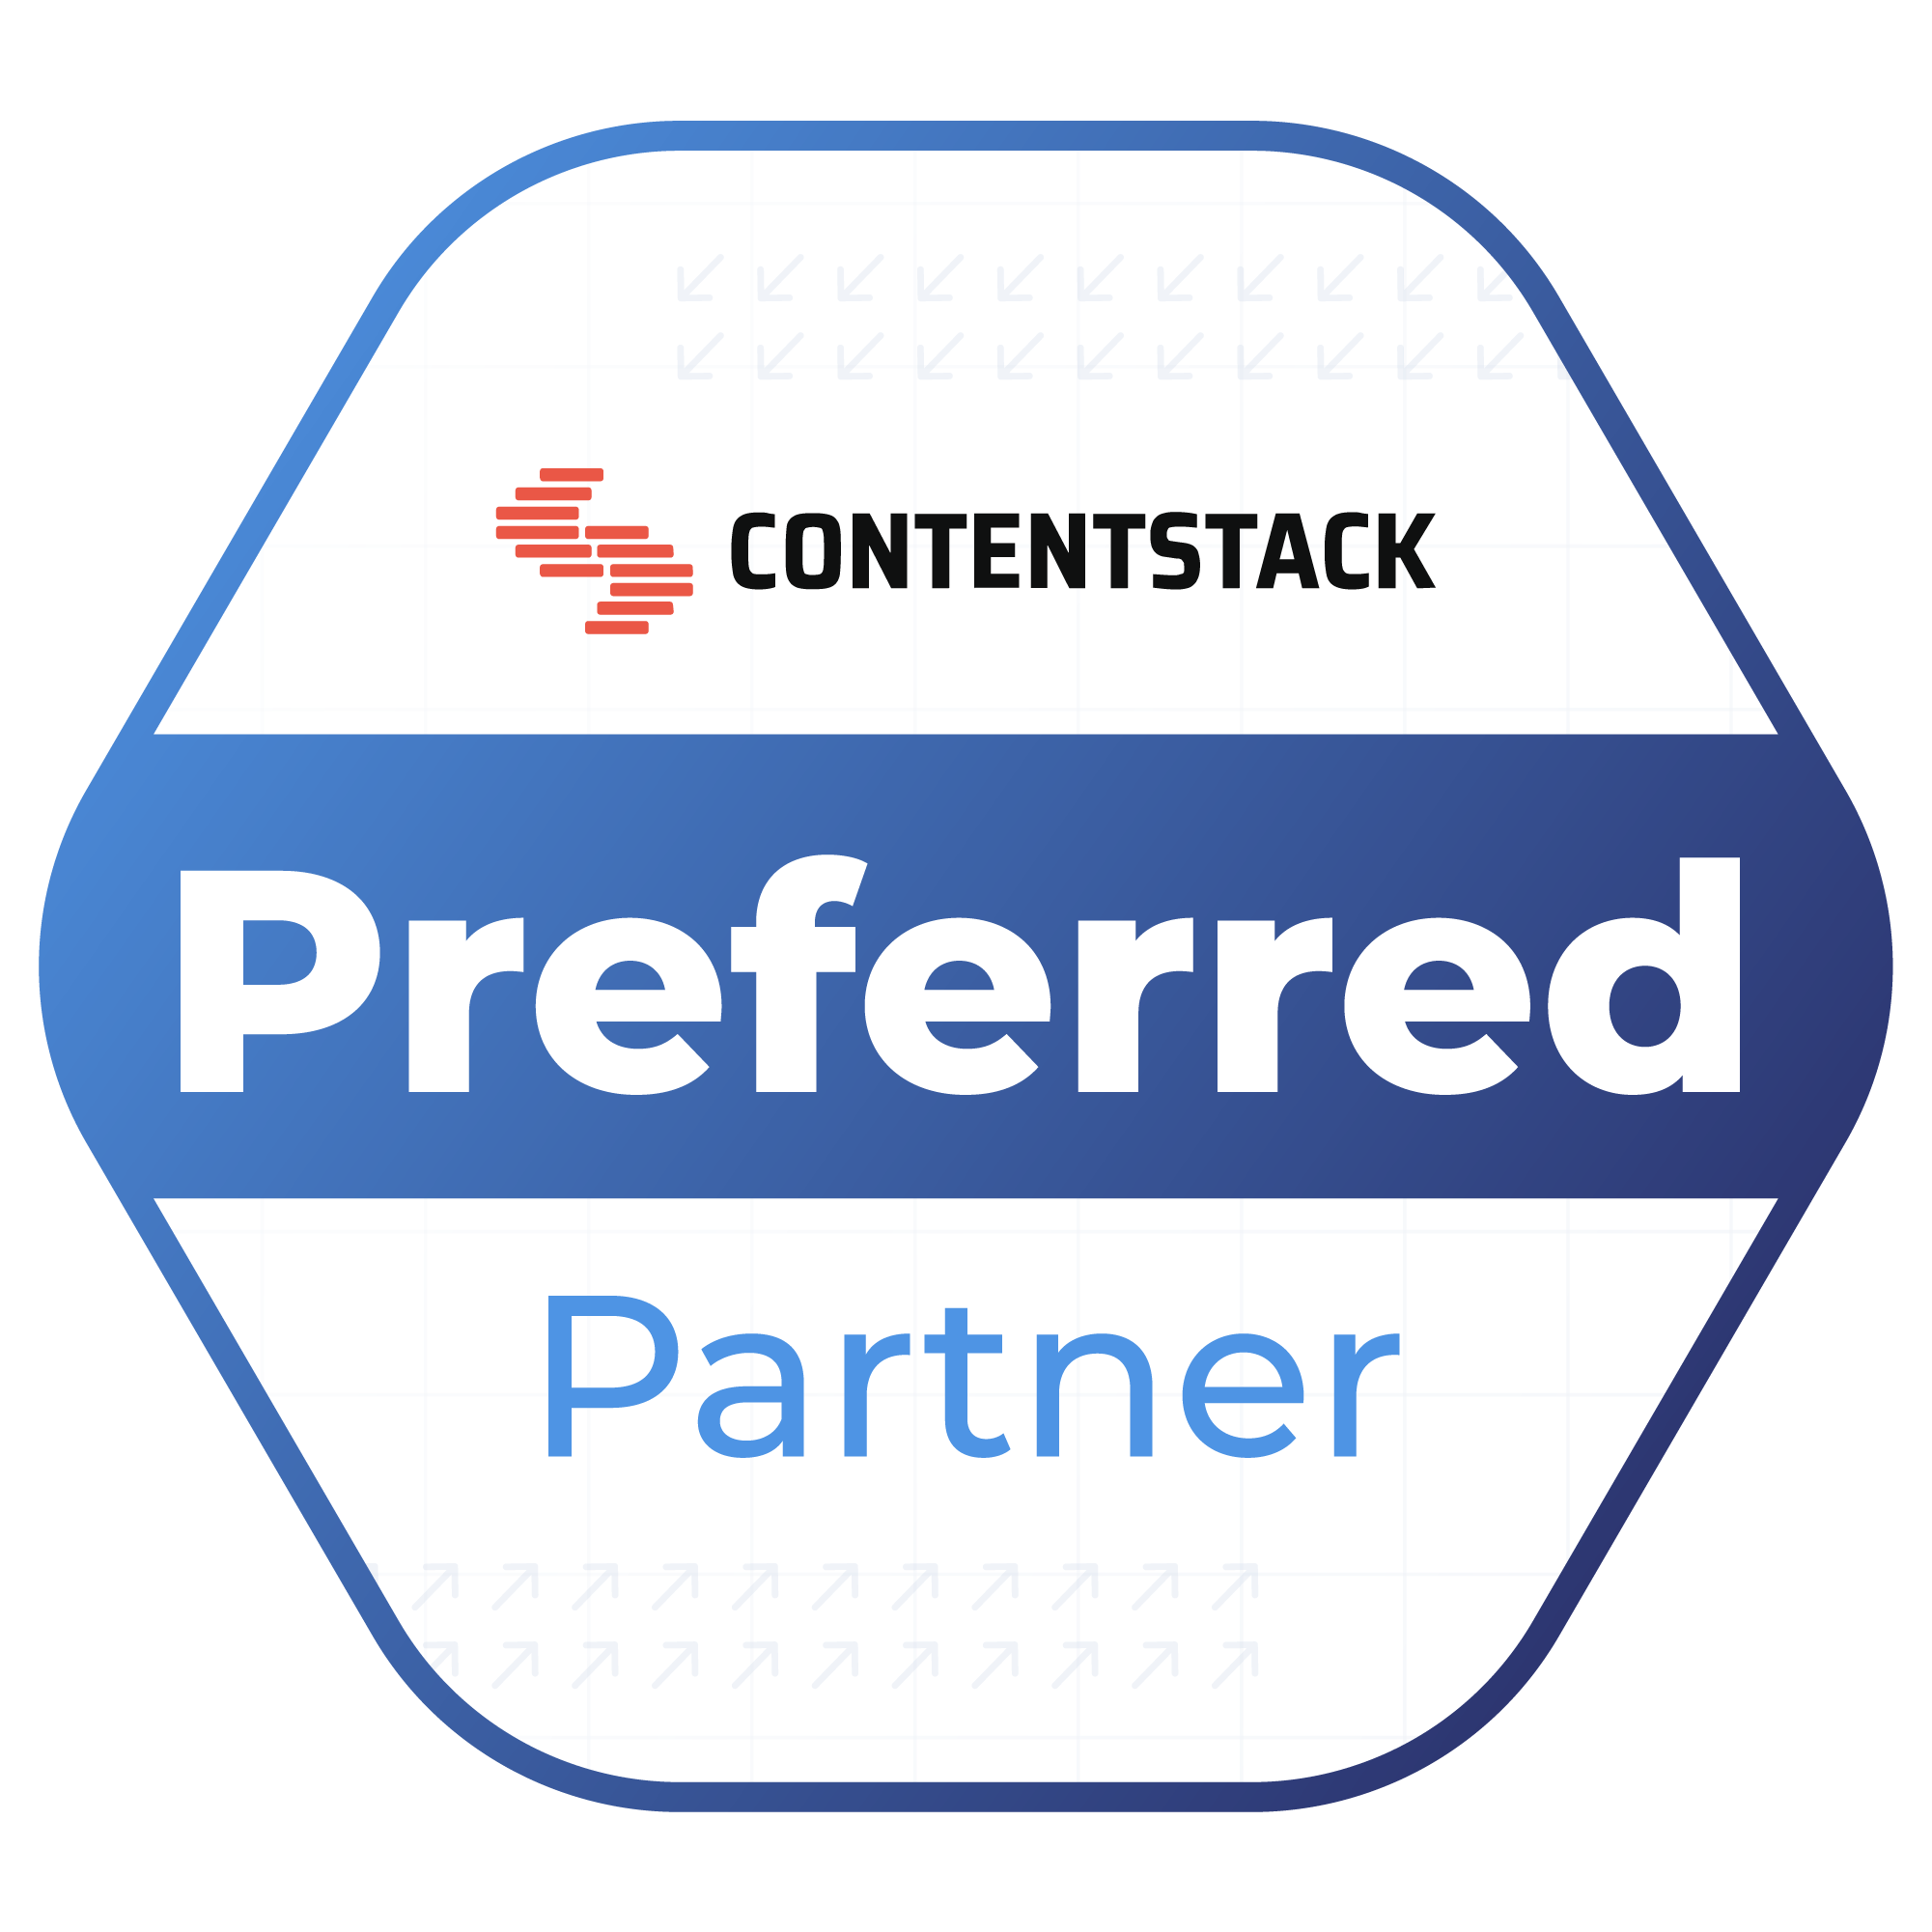 Contentstack Preferred Partner logo.